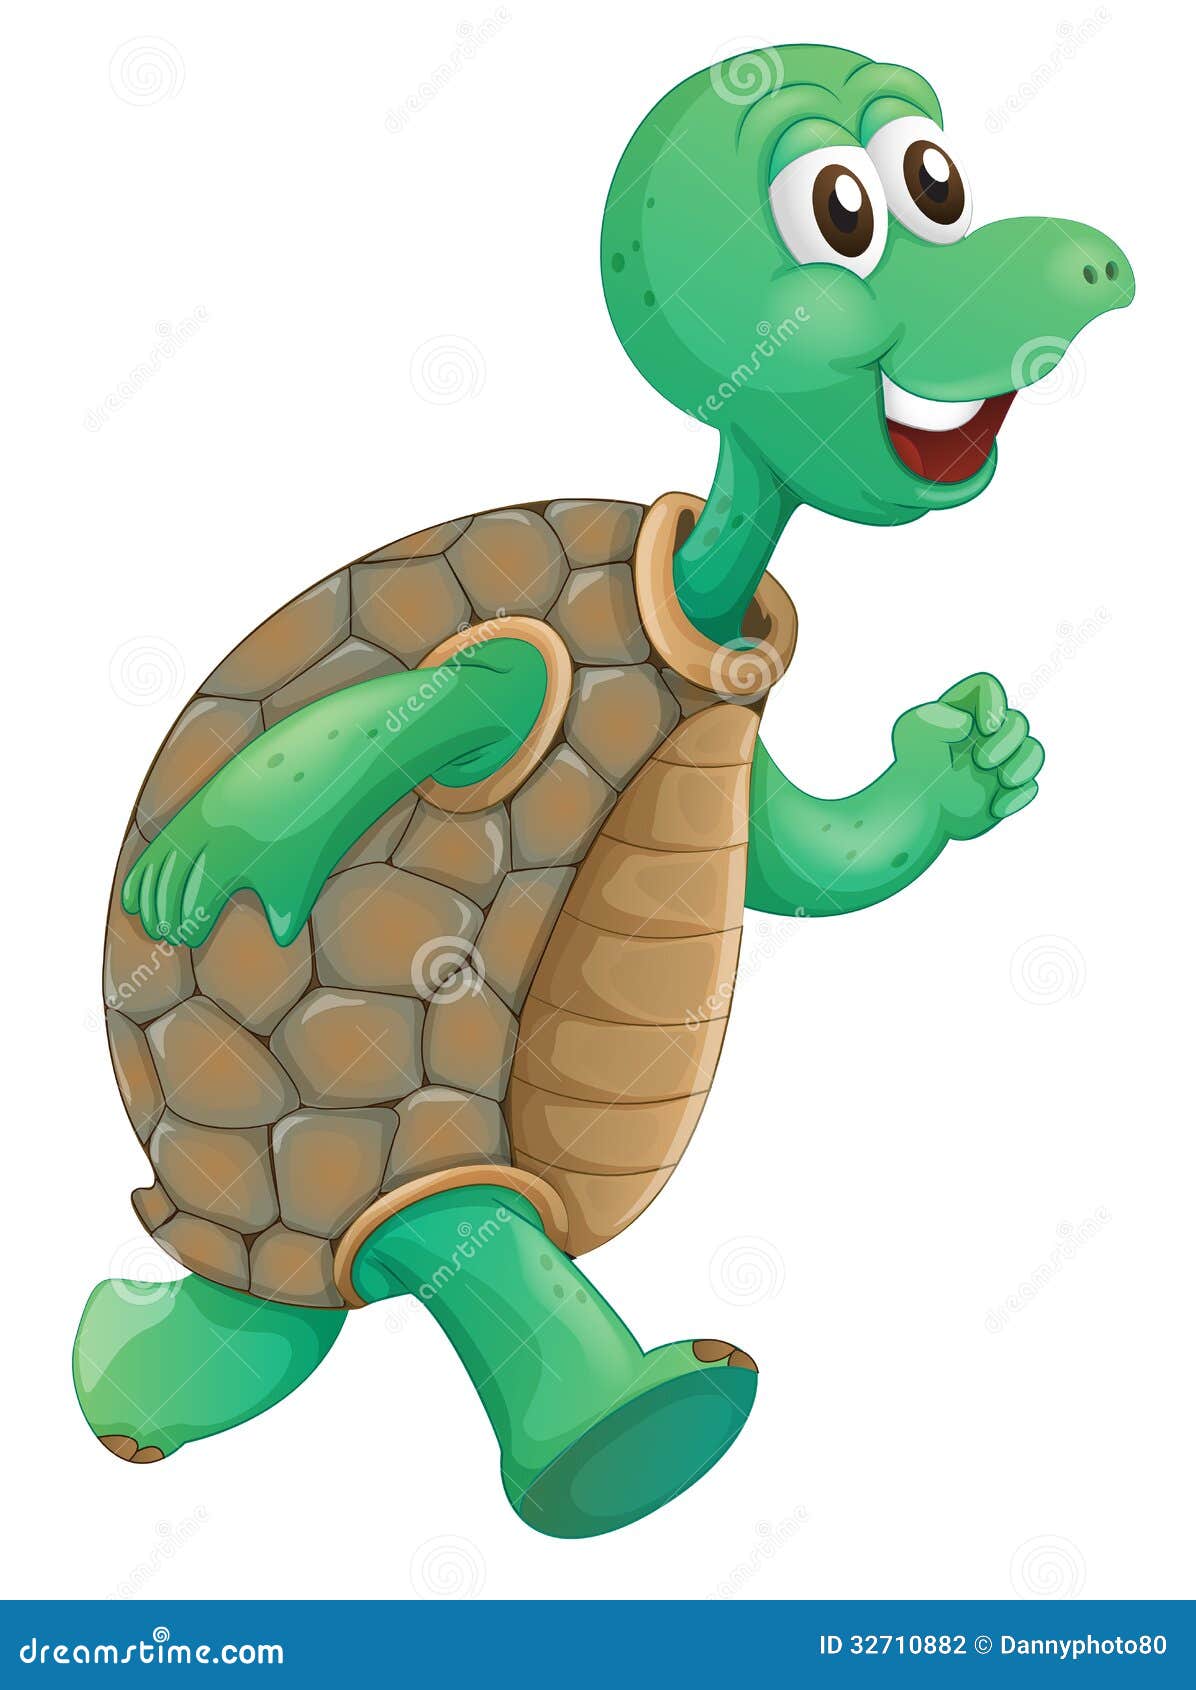 turtle running clipart - photo #10